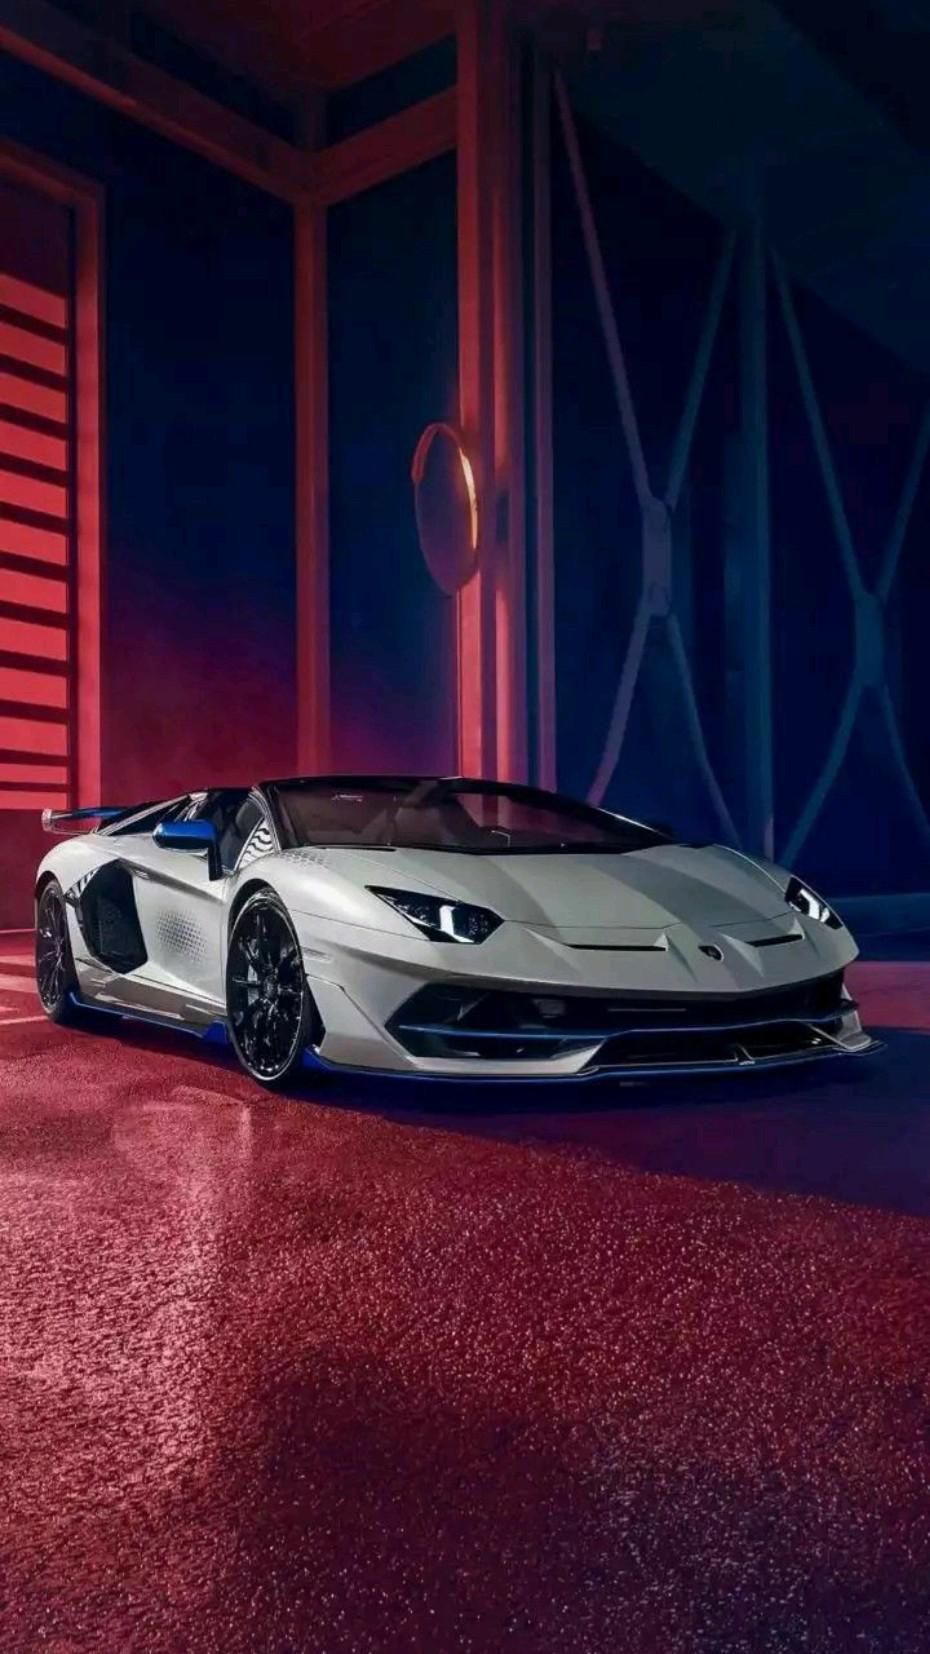  Lamborghini Aventador Hintergrundbild 930x1654. white Lamborghini wallpaper futuristic aesthetic. Luxury cars, Lamborghini, Luxury cars audi